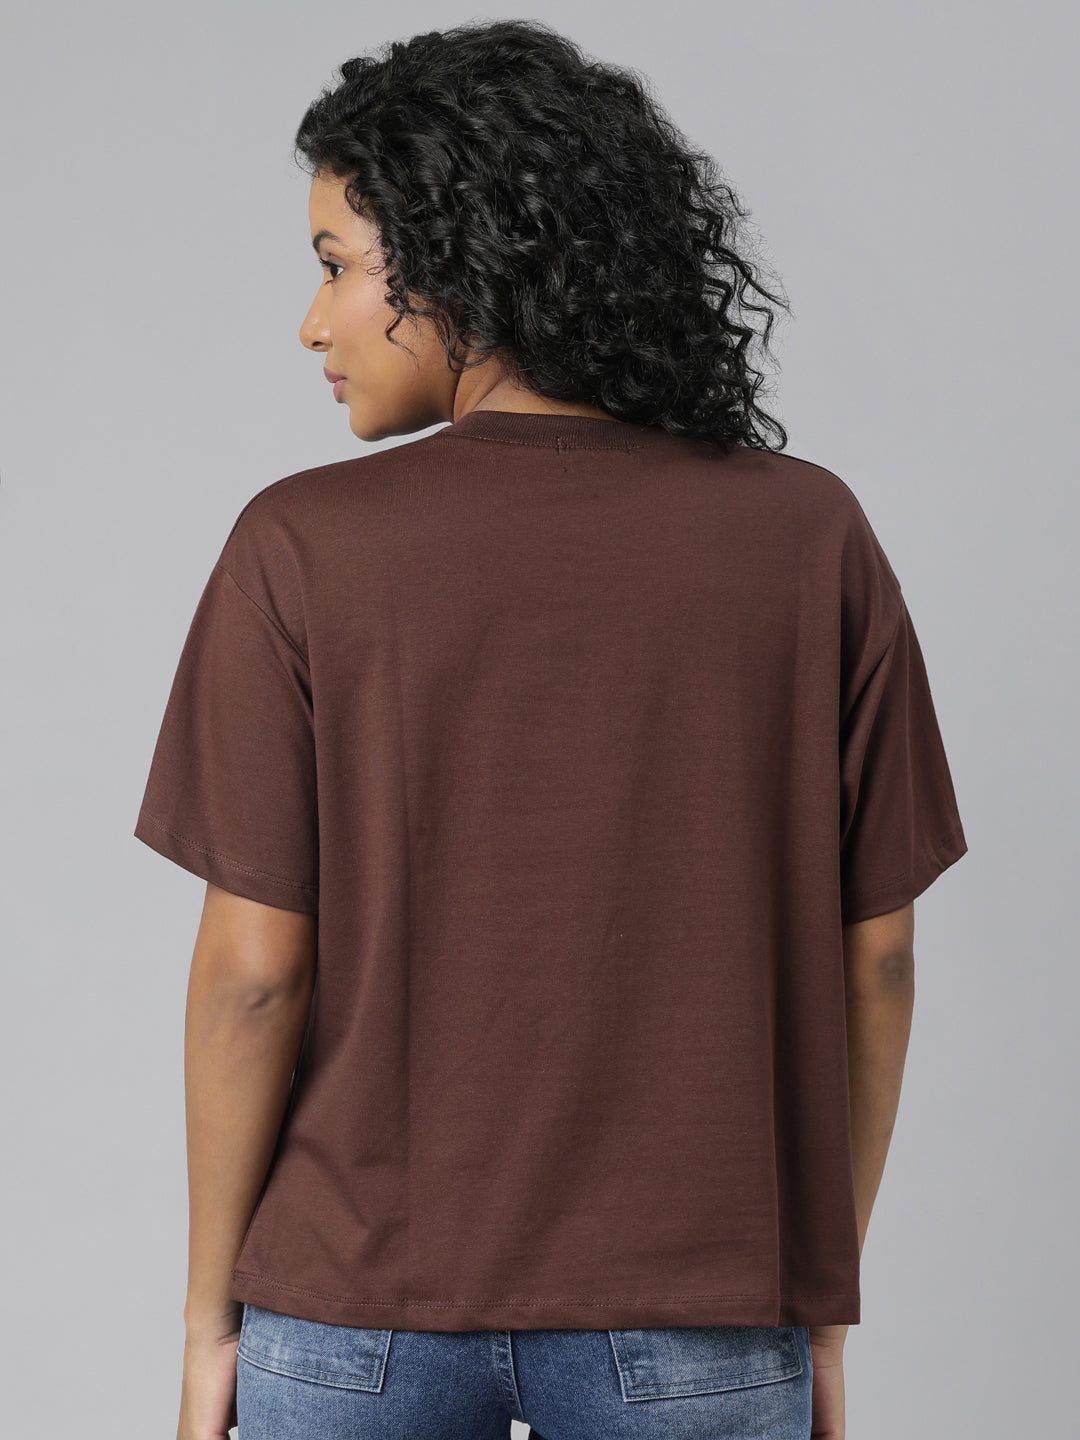 Women Solid Brown T Shirt